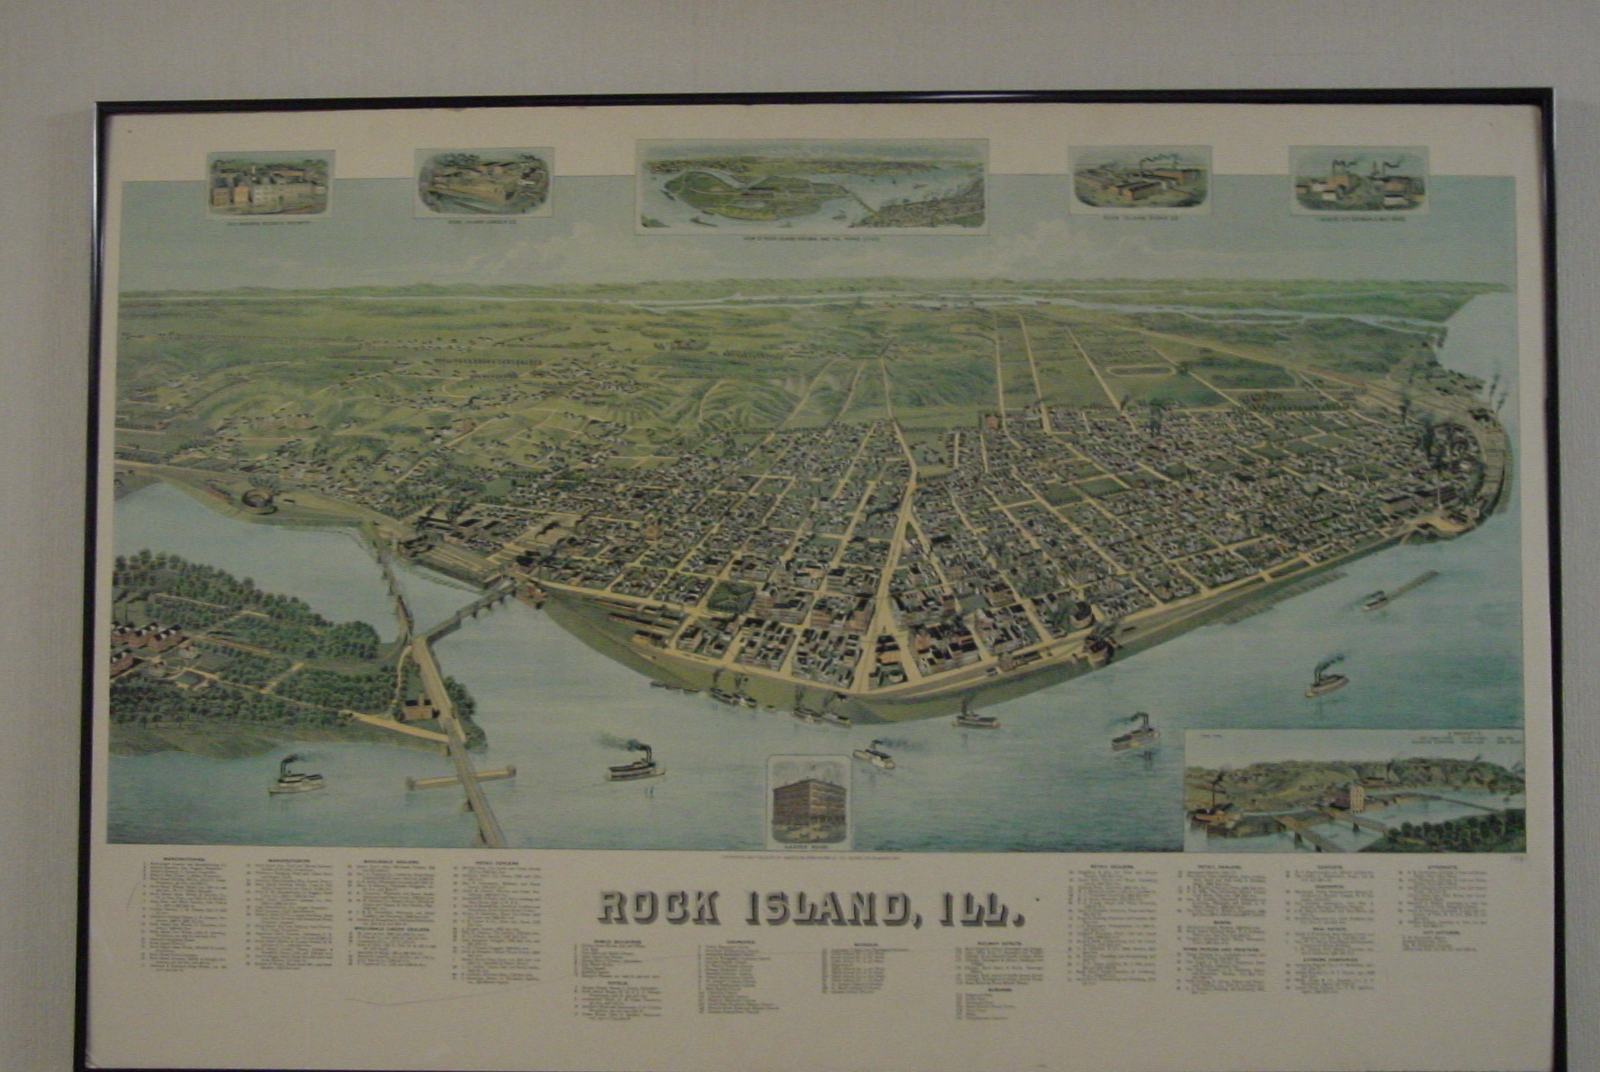 Print of historic Rock Island, IL map